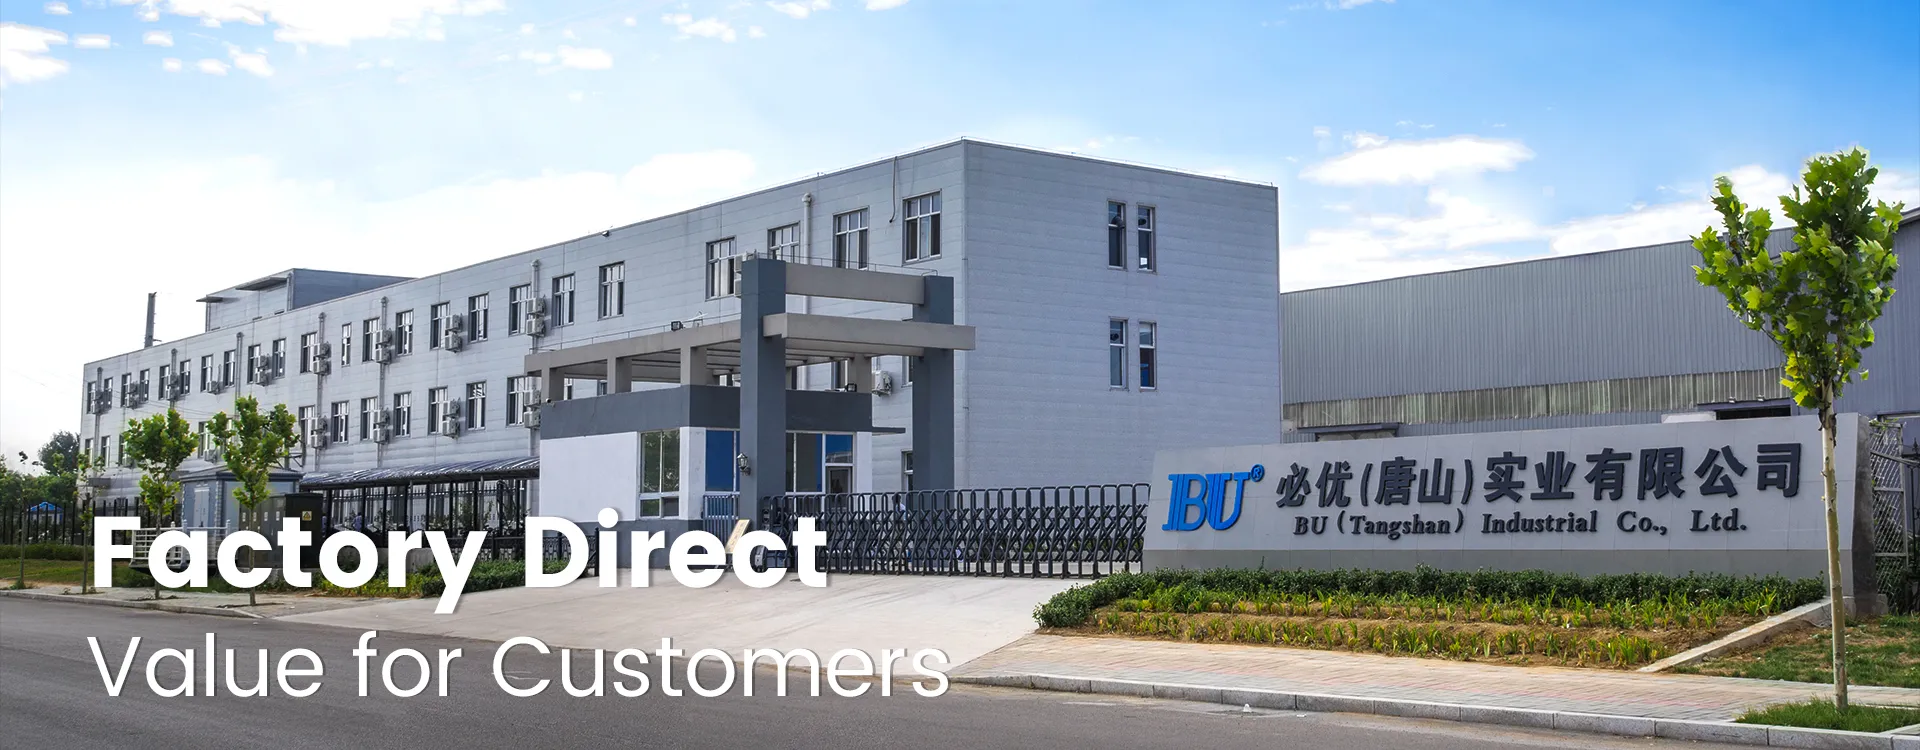 BU ( Tangshan ) Industrial Co., Ltd.